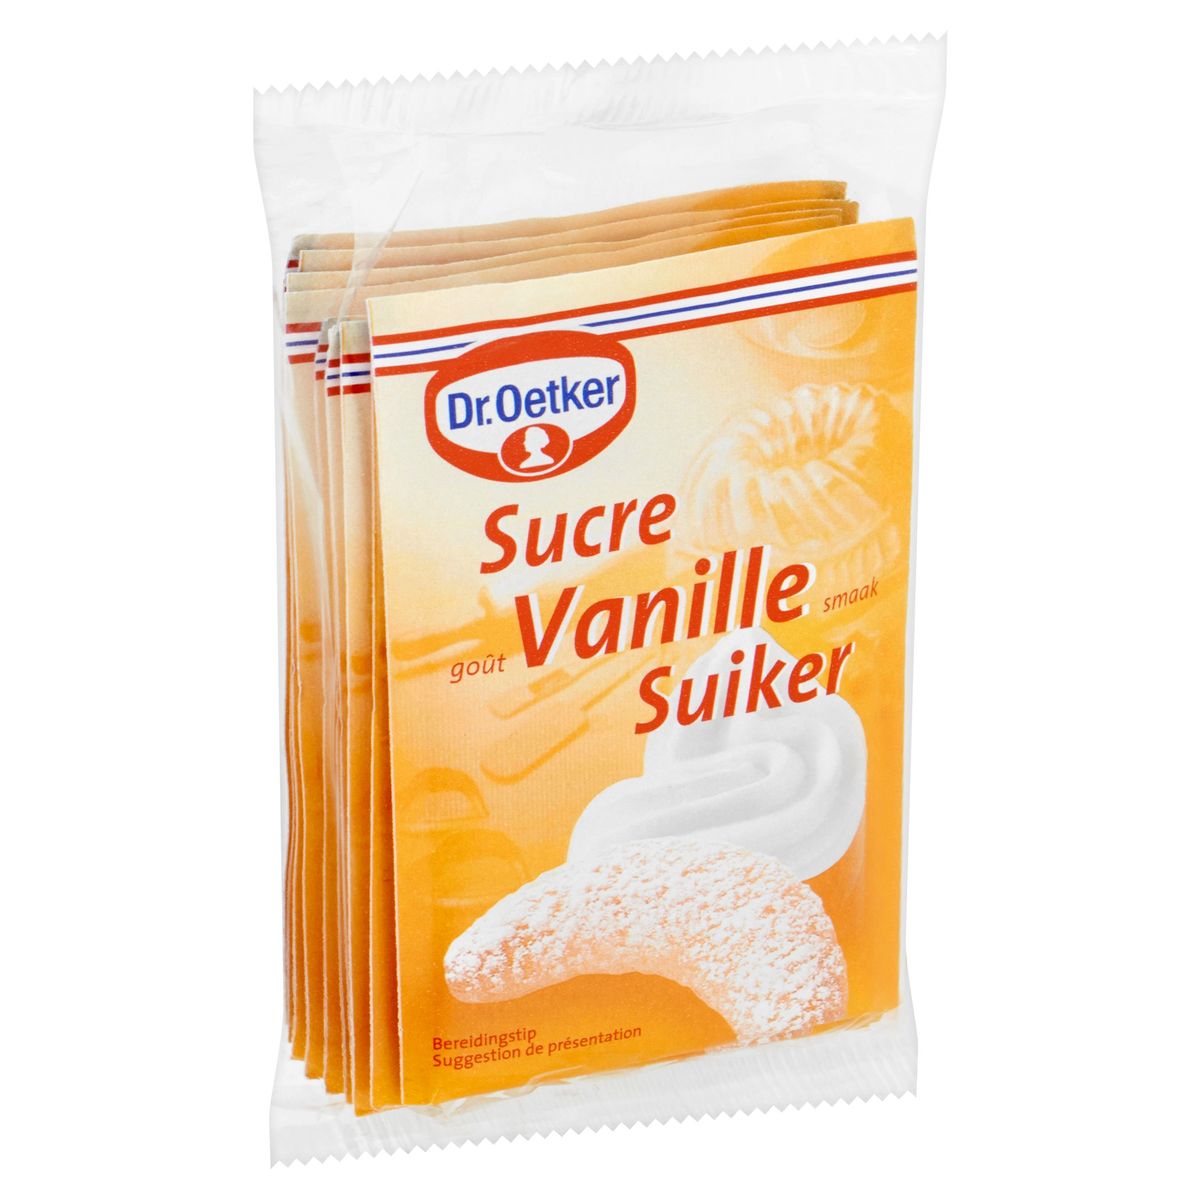 Dr. Oetker Vanille Smaak Suiker 10 x 8 g